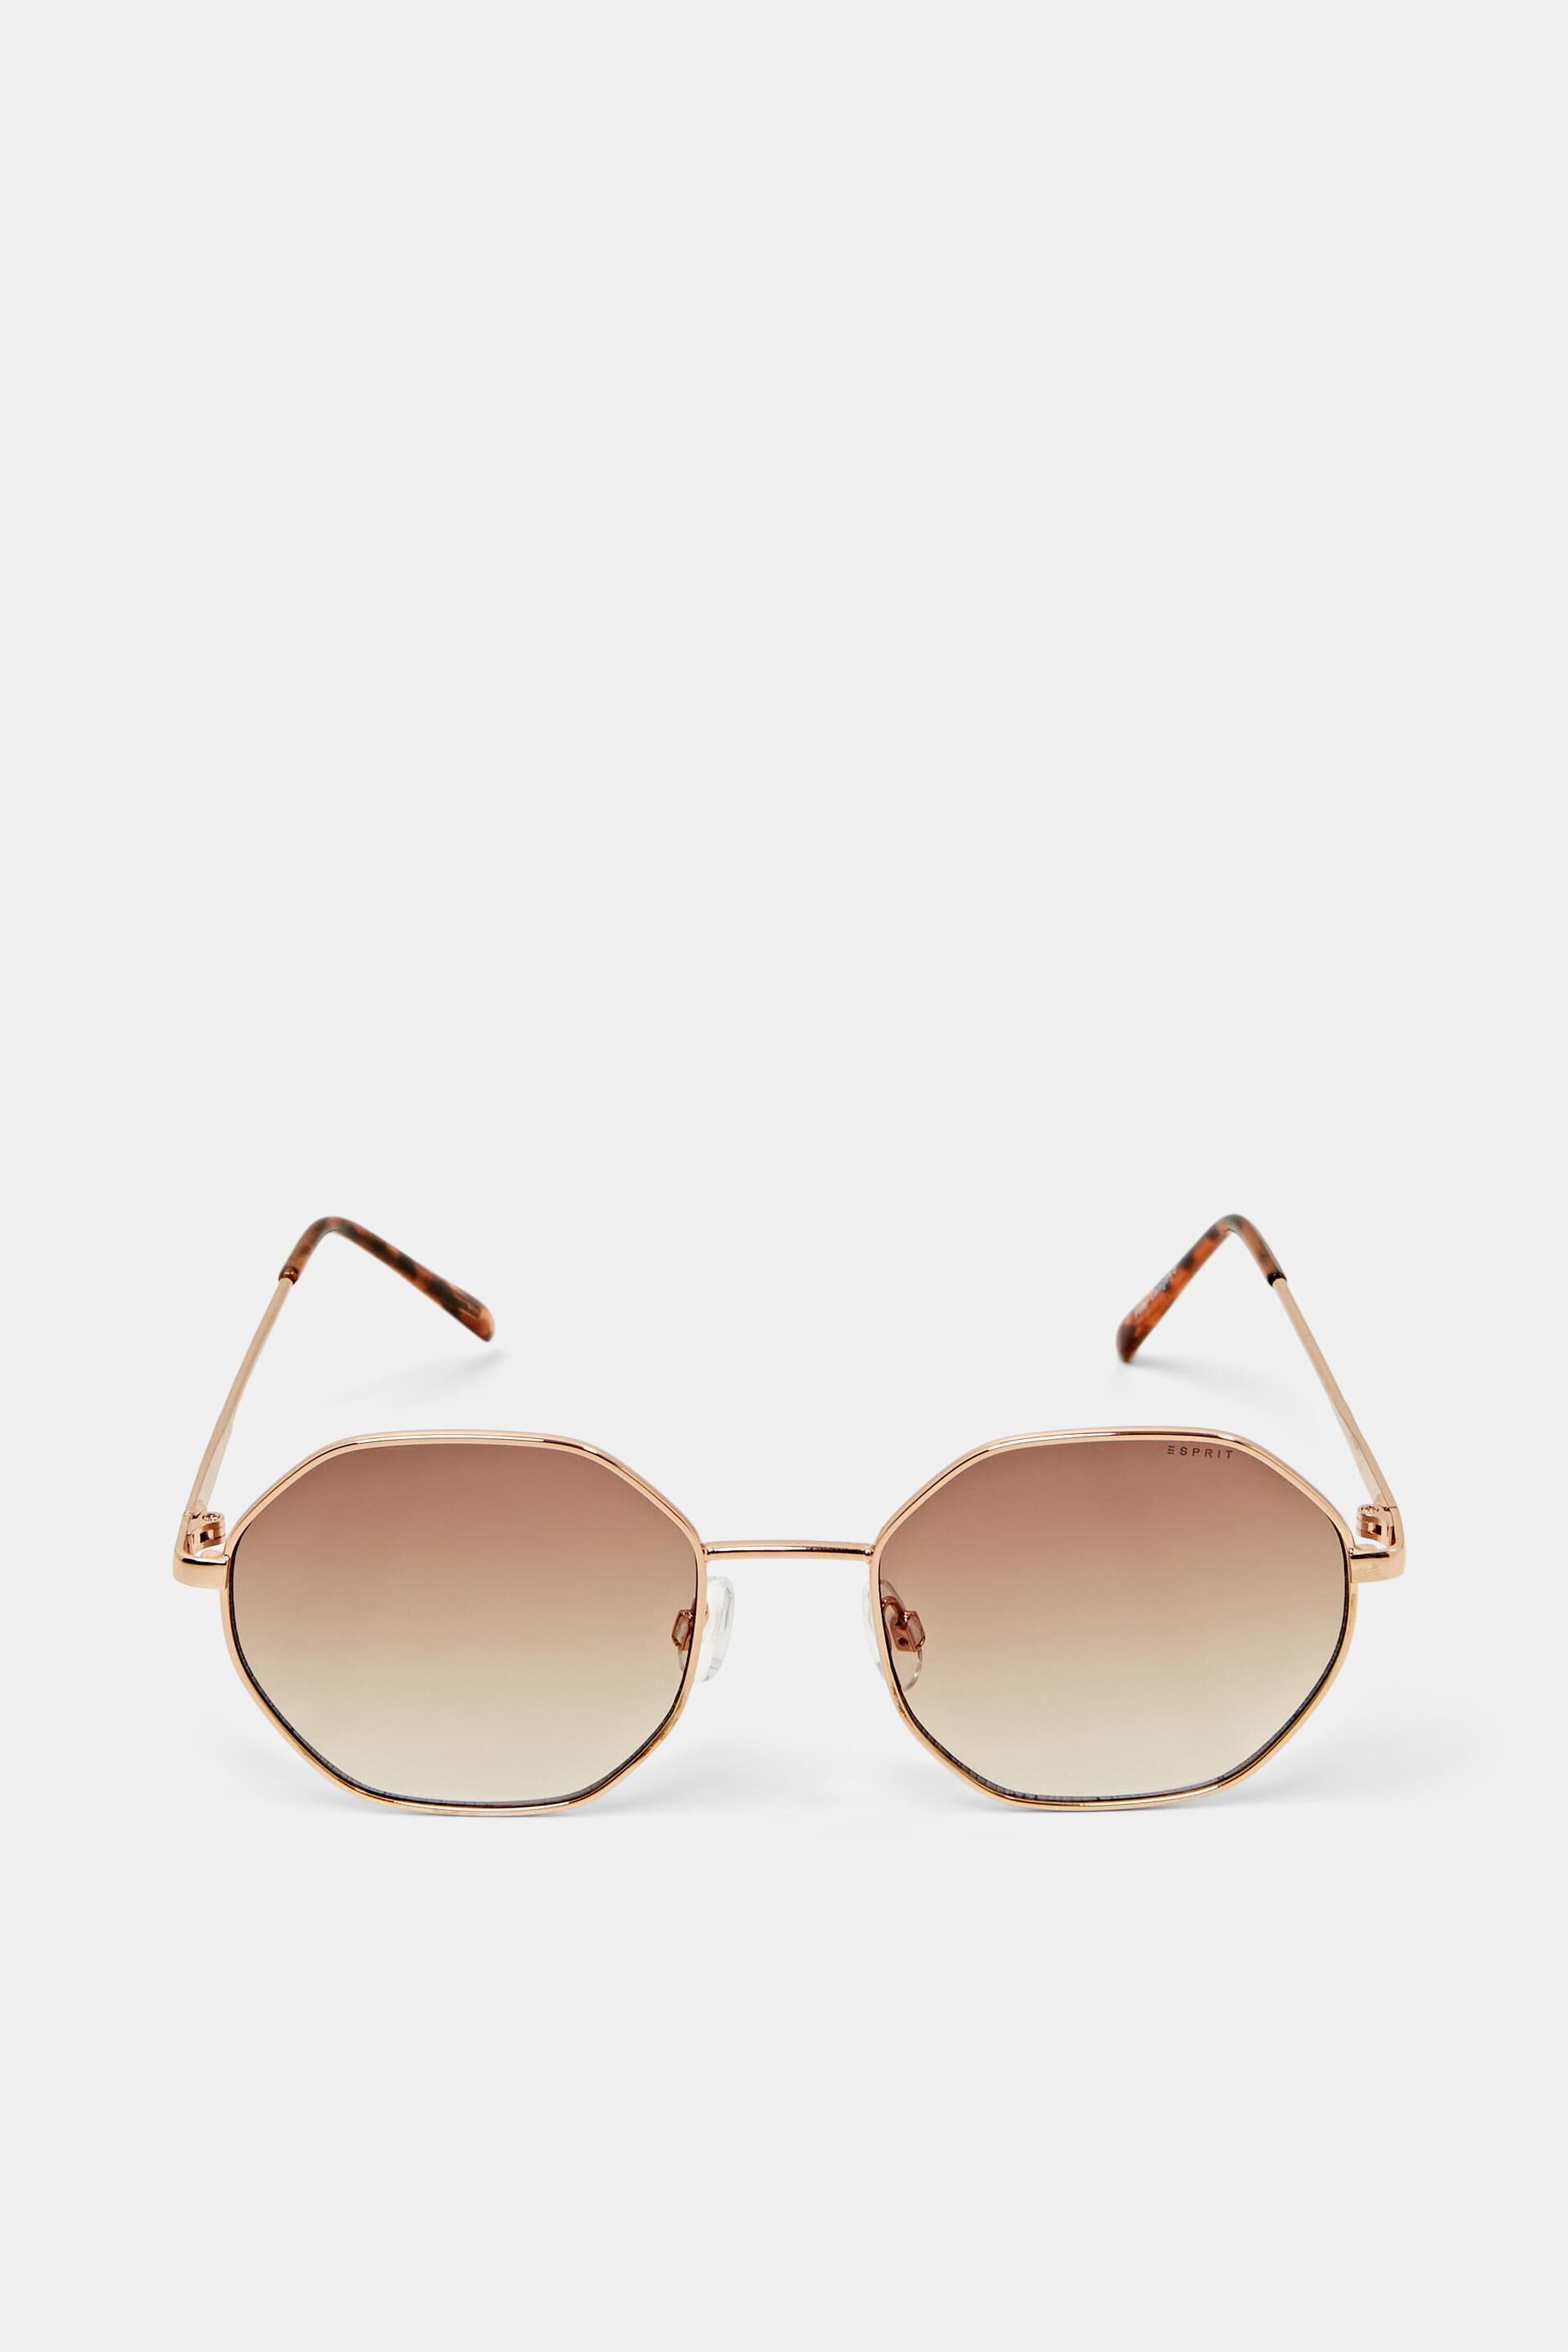 Esprit Online Store Sonnenbrille mit filigranem goldfarbenem Metallrahmen